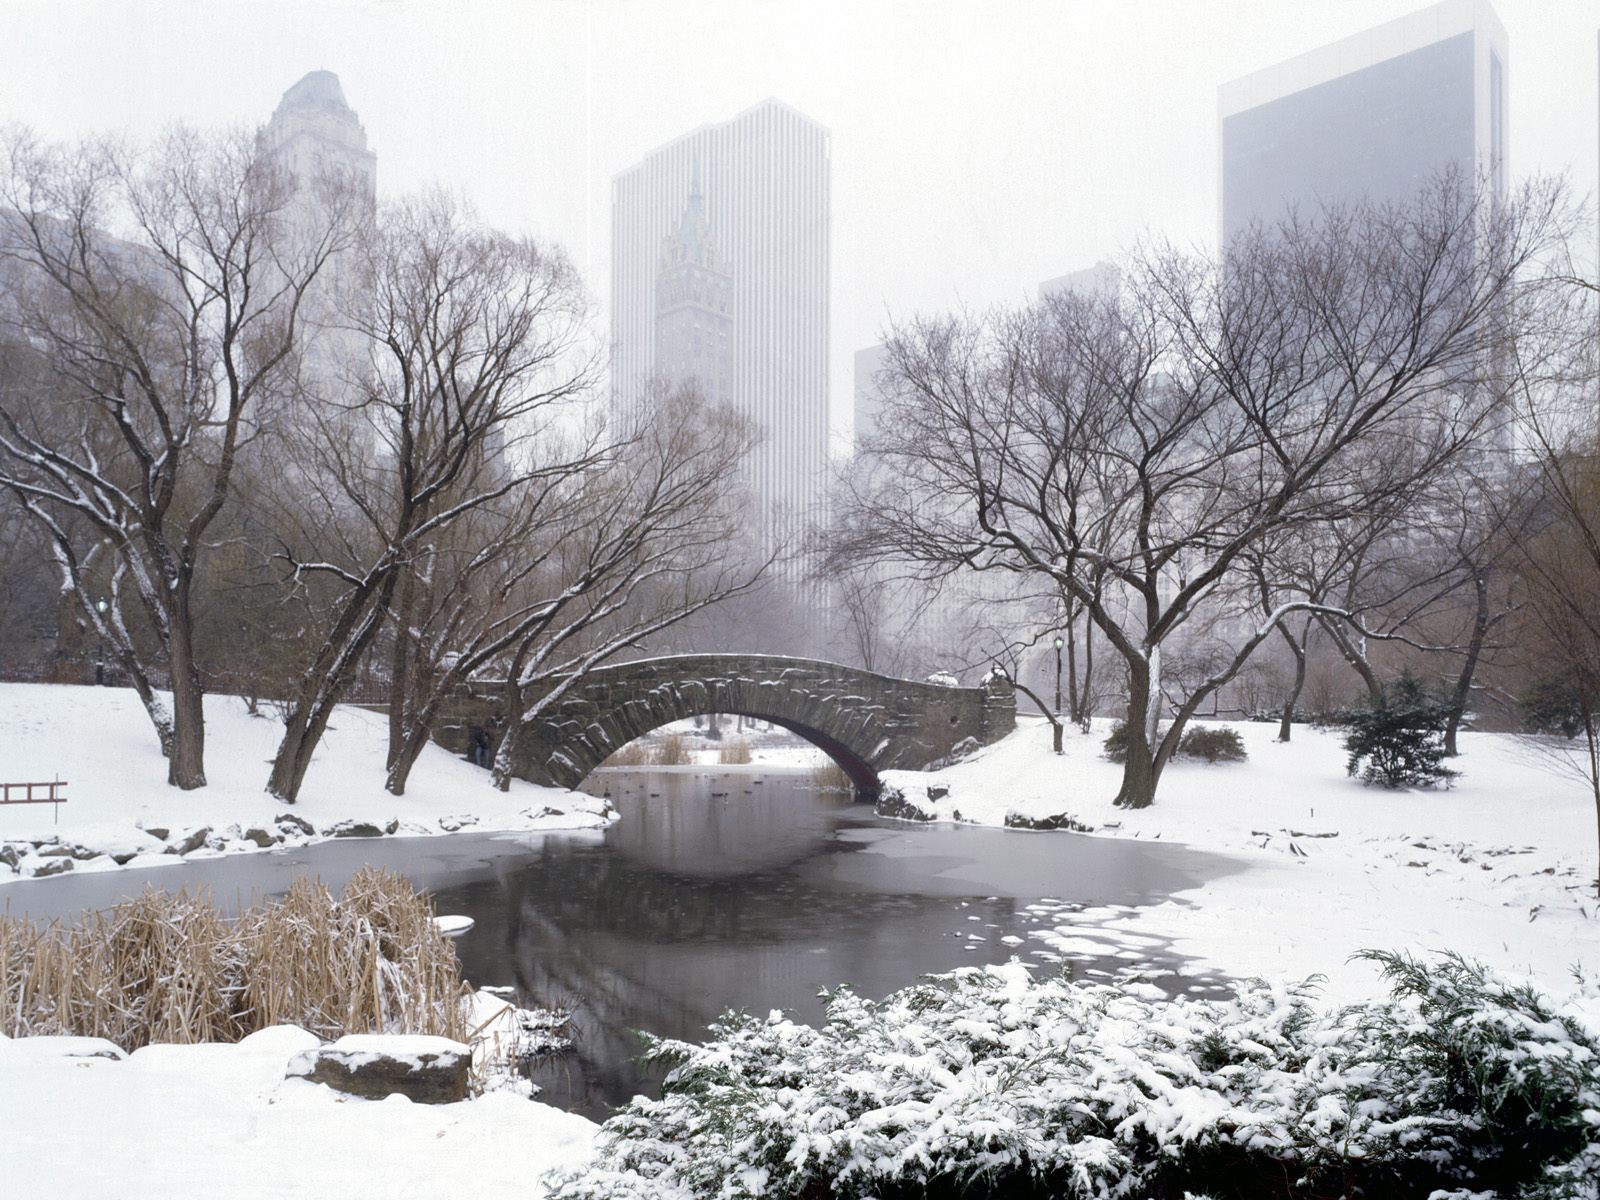  Winter New York City New York   Scenic Wallpaper Image featuring Snow